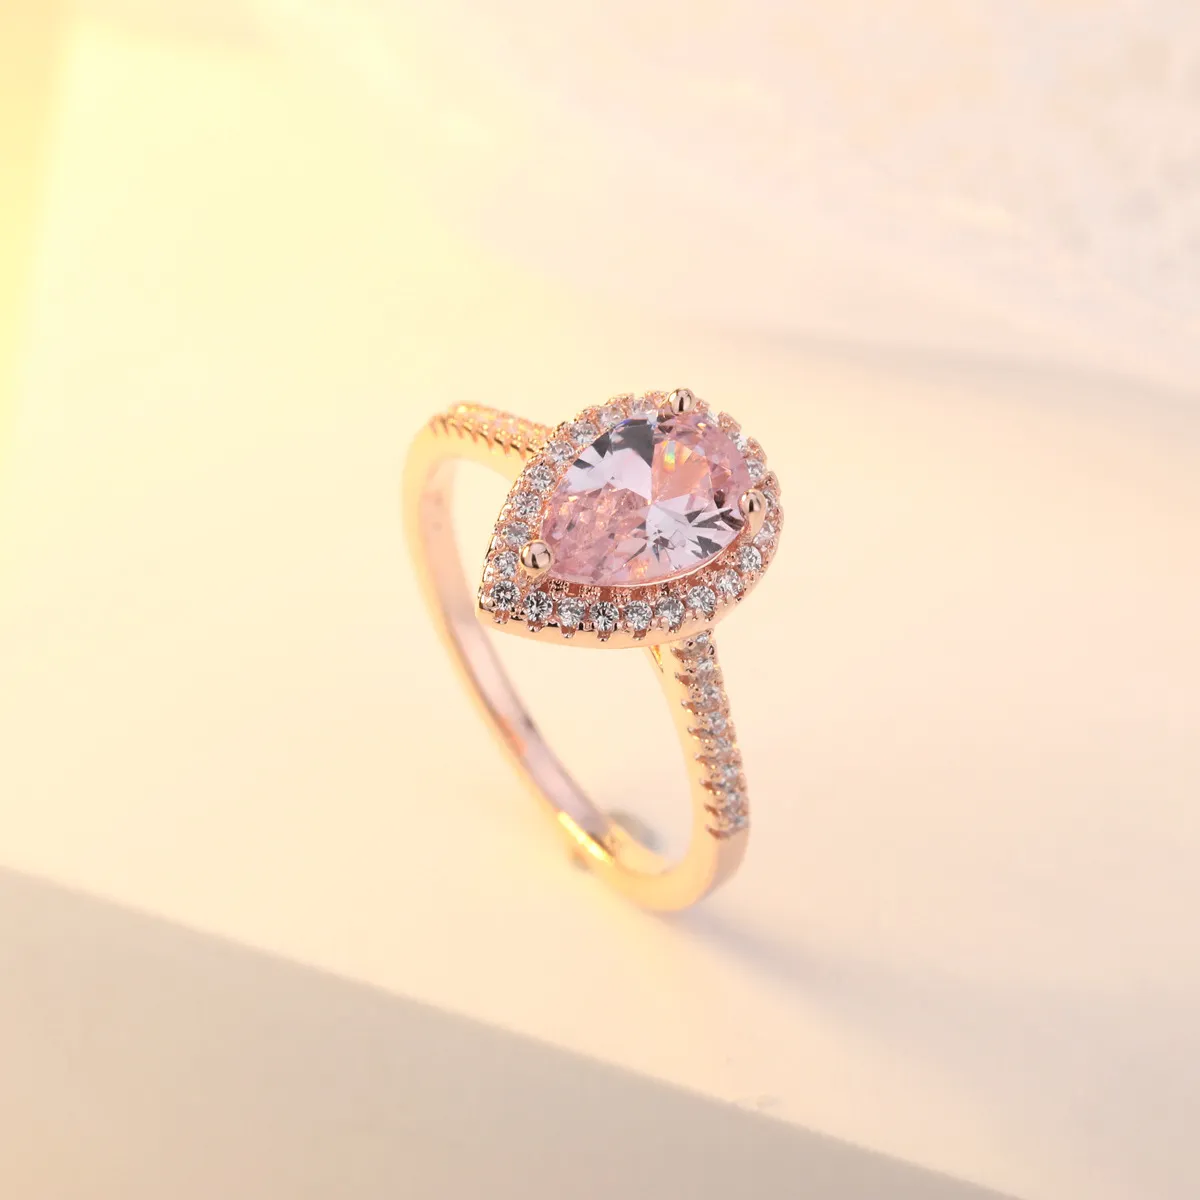 OMHXZJ toda la moda europea mujer chica fiesta regalo de boda gota de agua circonita blanca rosa anillo de oro rosa de 18 quilates RR5983400836